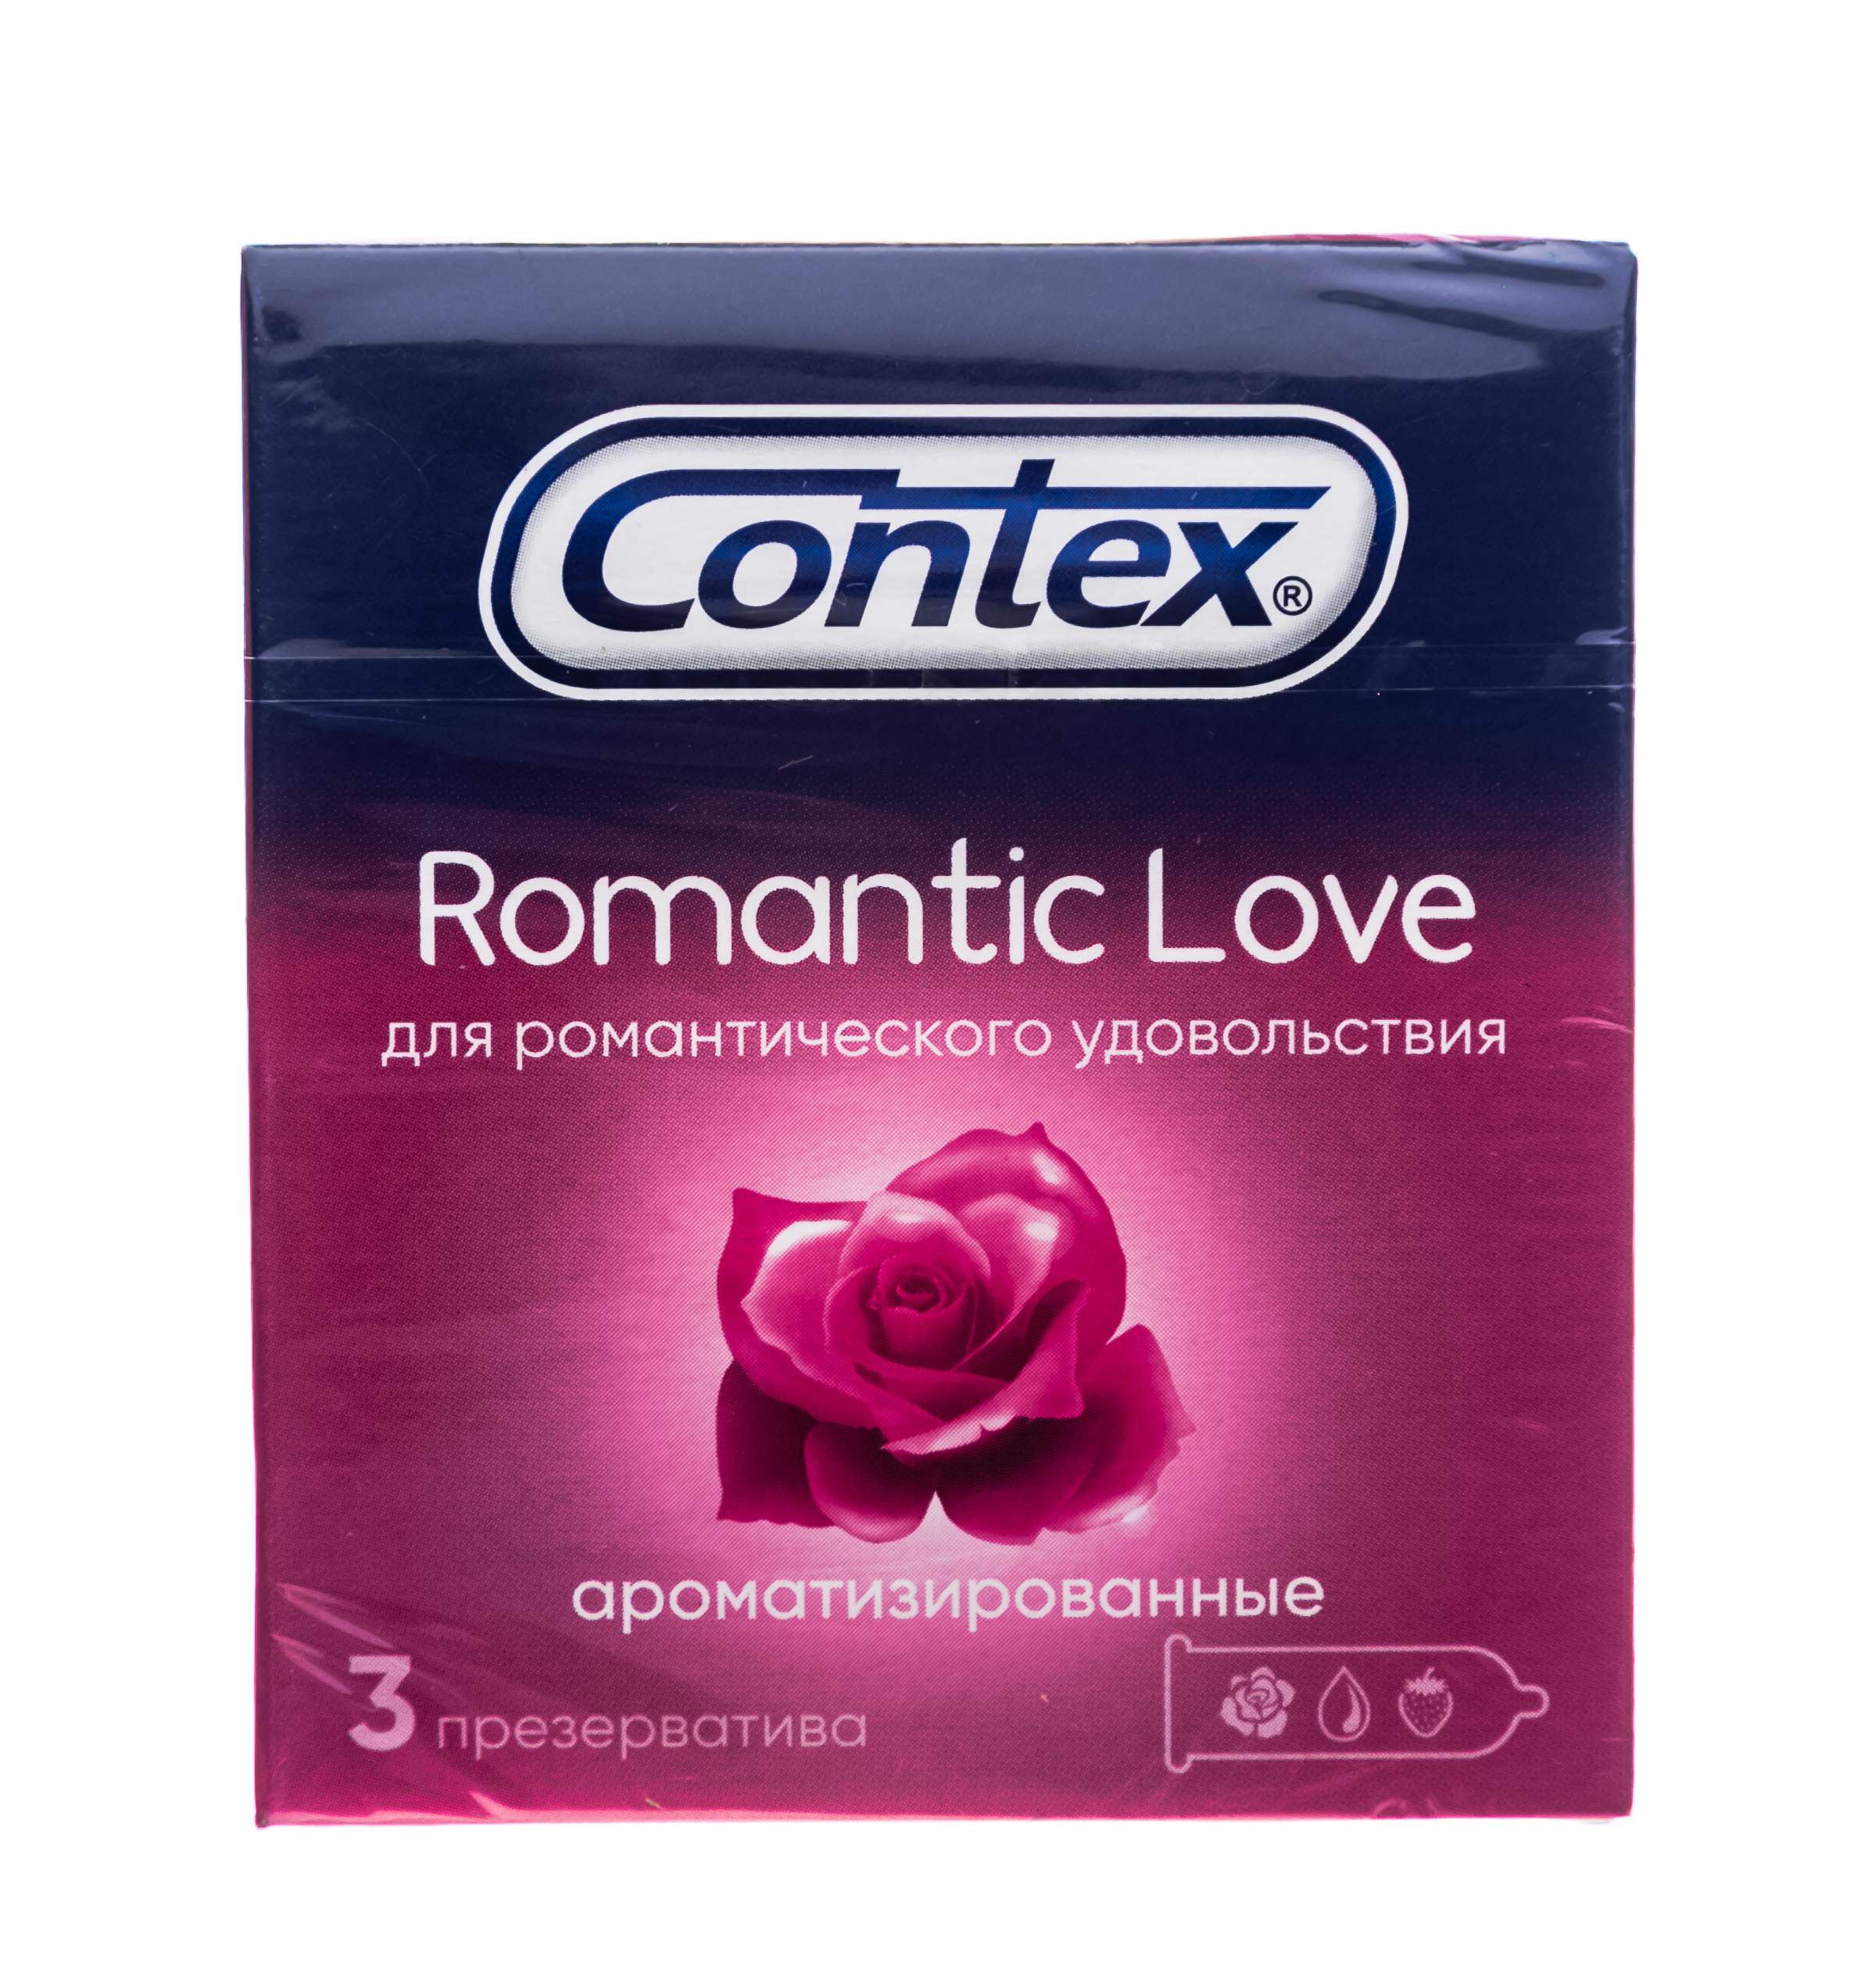 Contex Презервативы Romantic Love ароматизированные, №3 (Contex, Презервативы) цена и фото